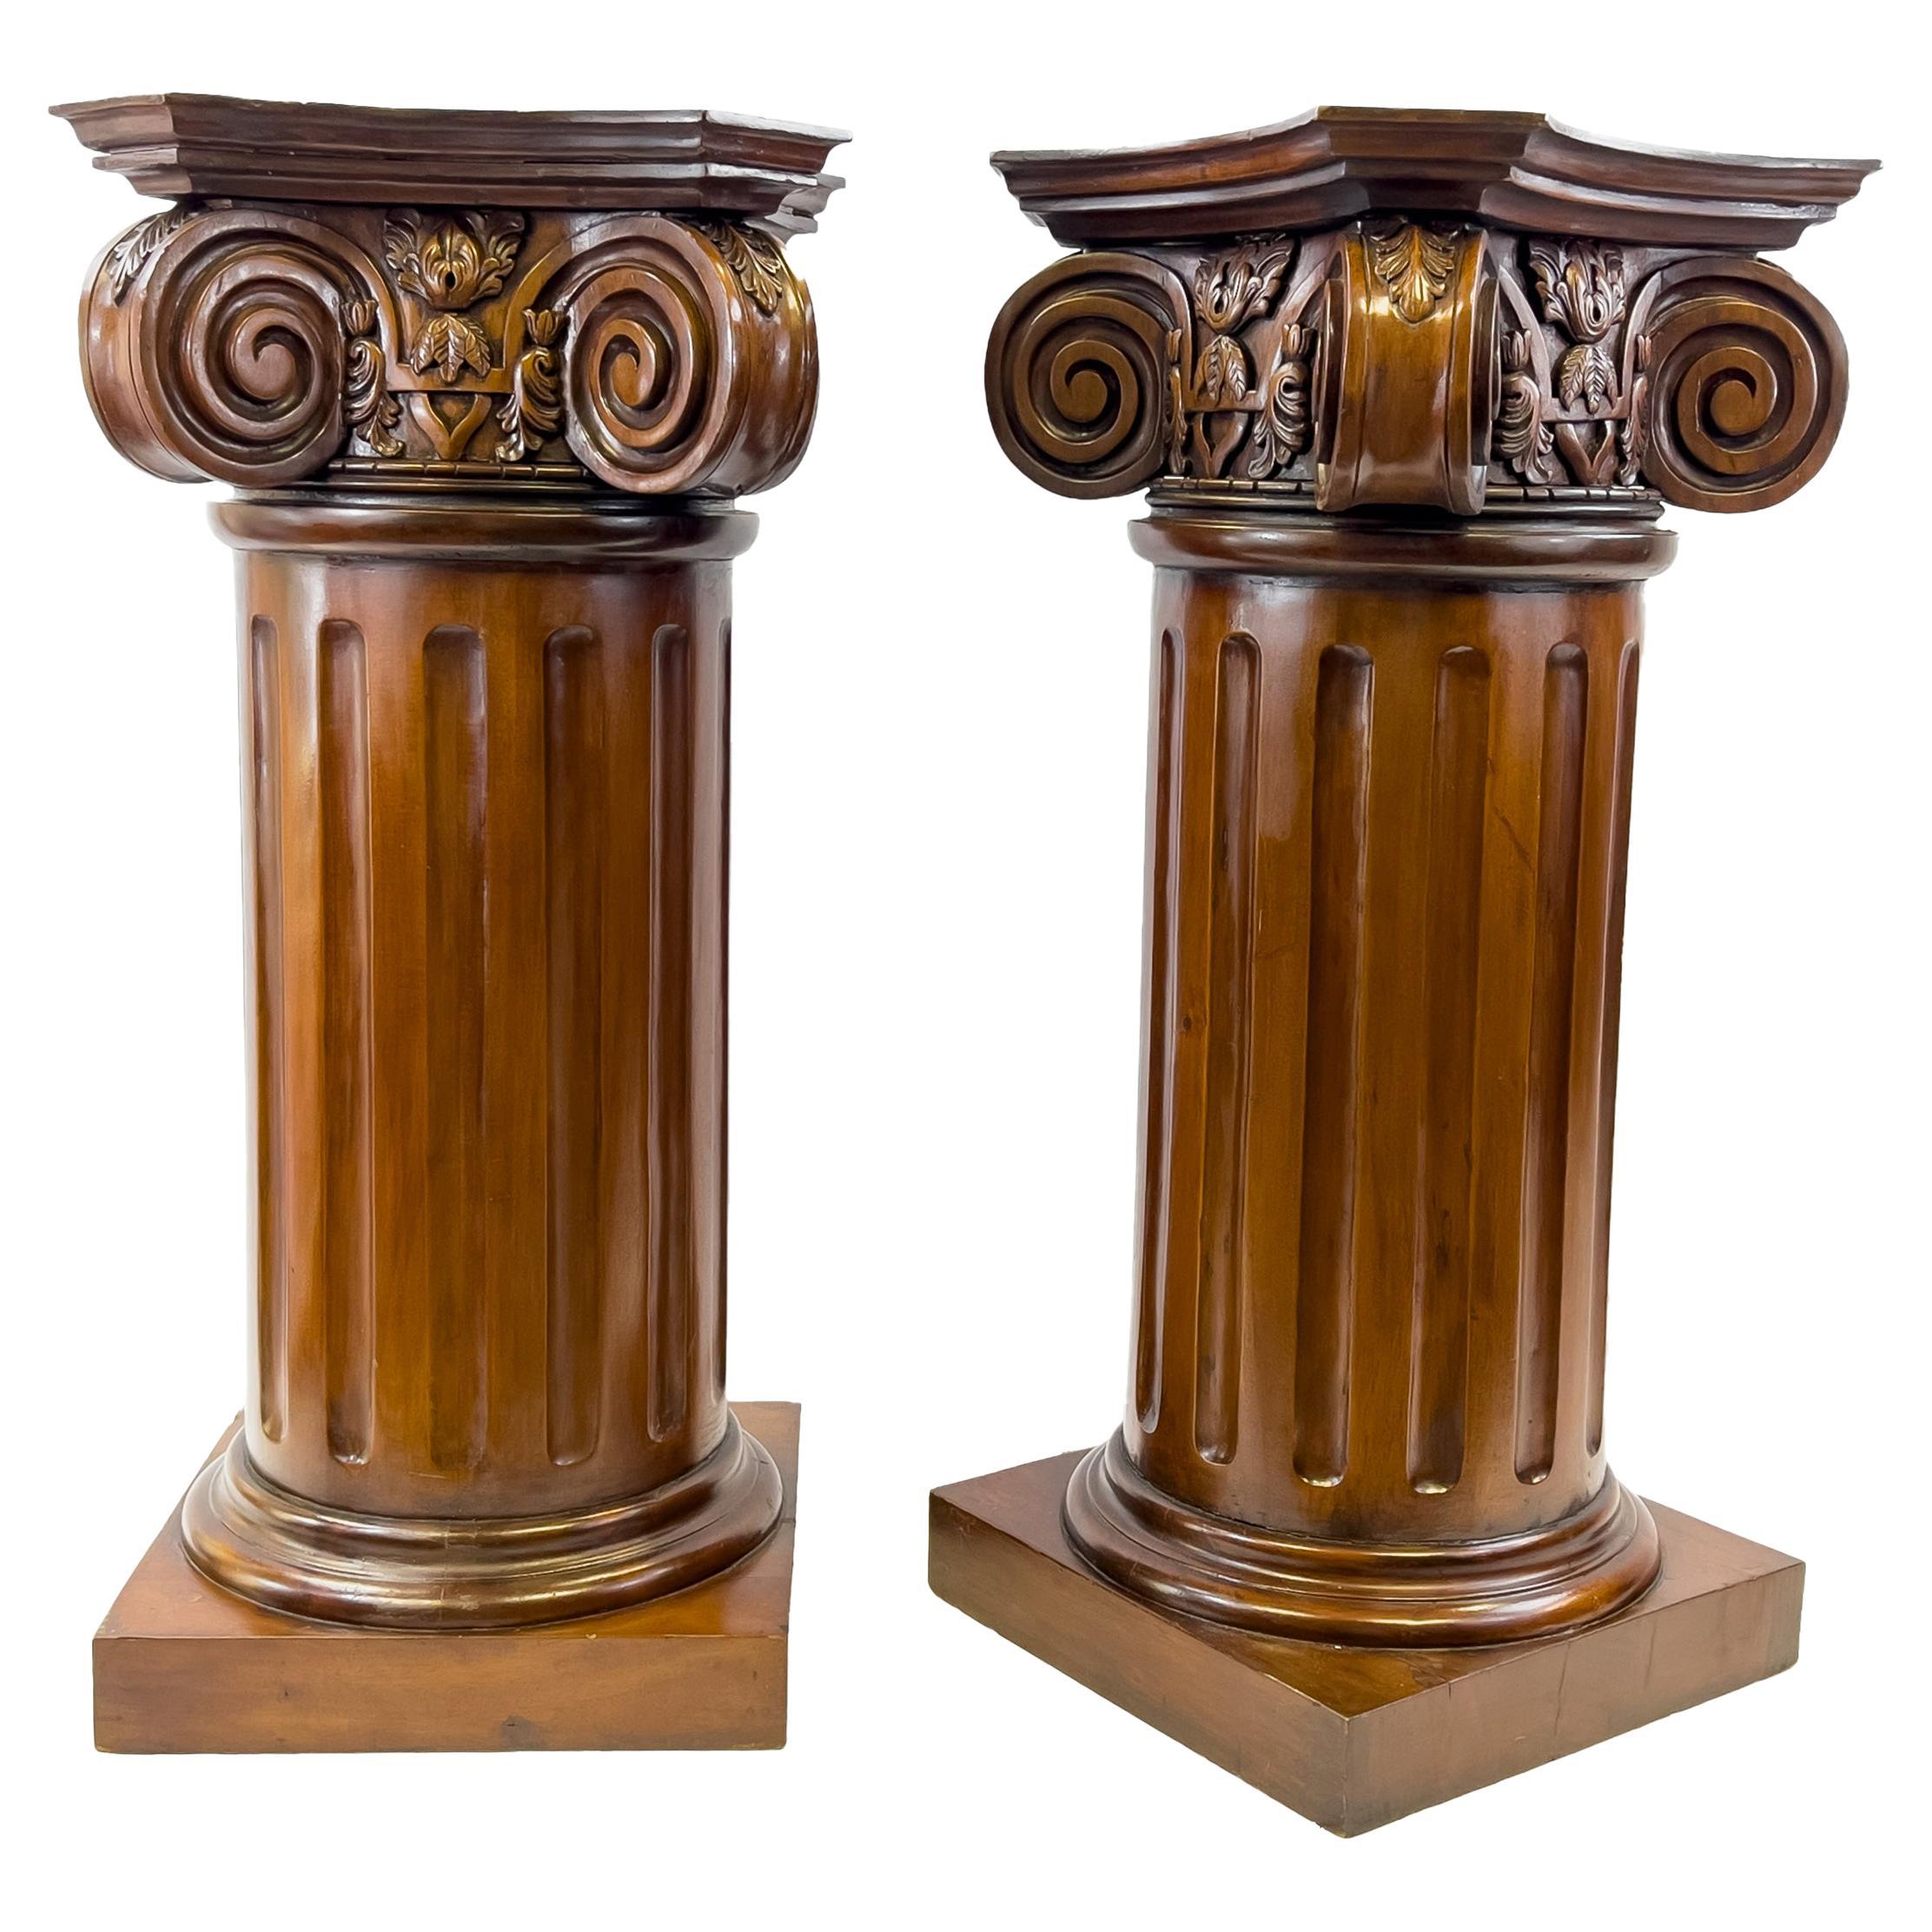 Pair of Carved Wood Columns Pedestals